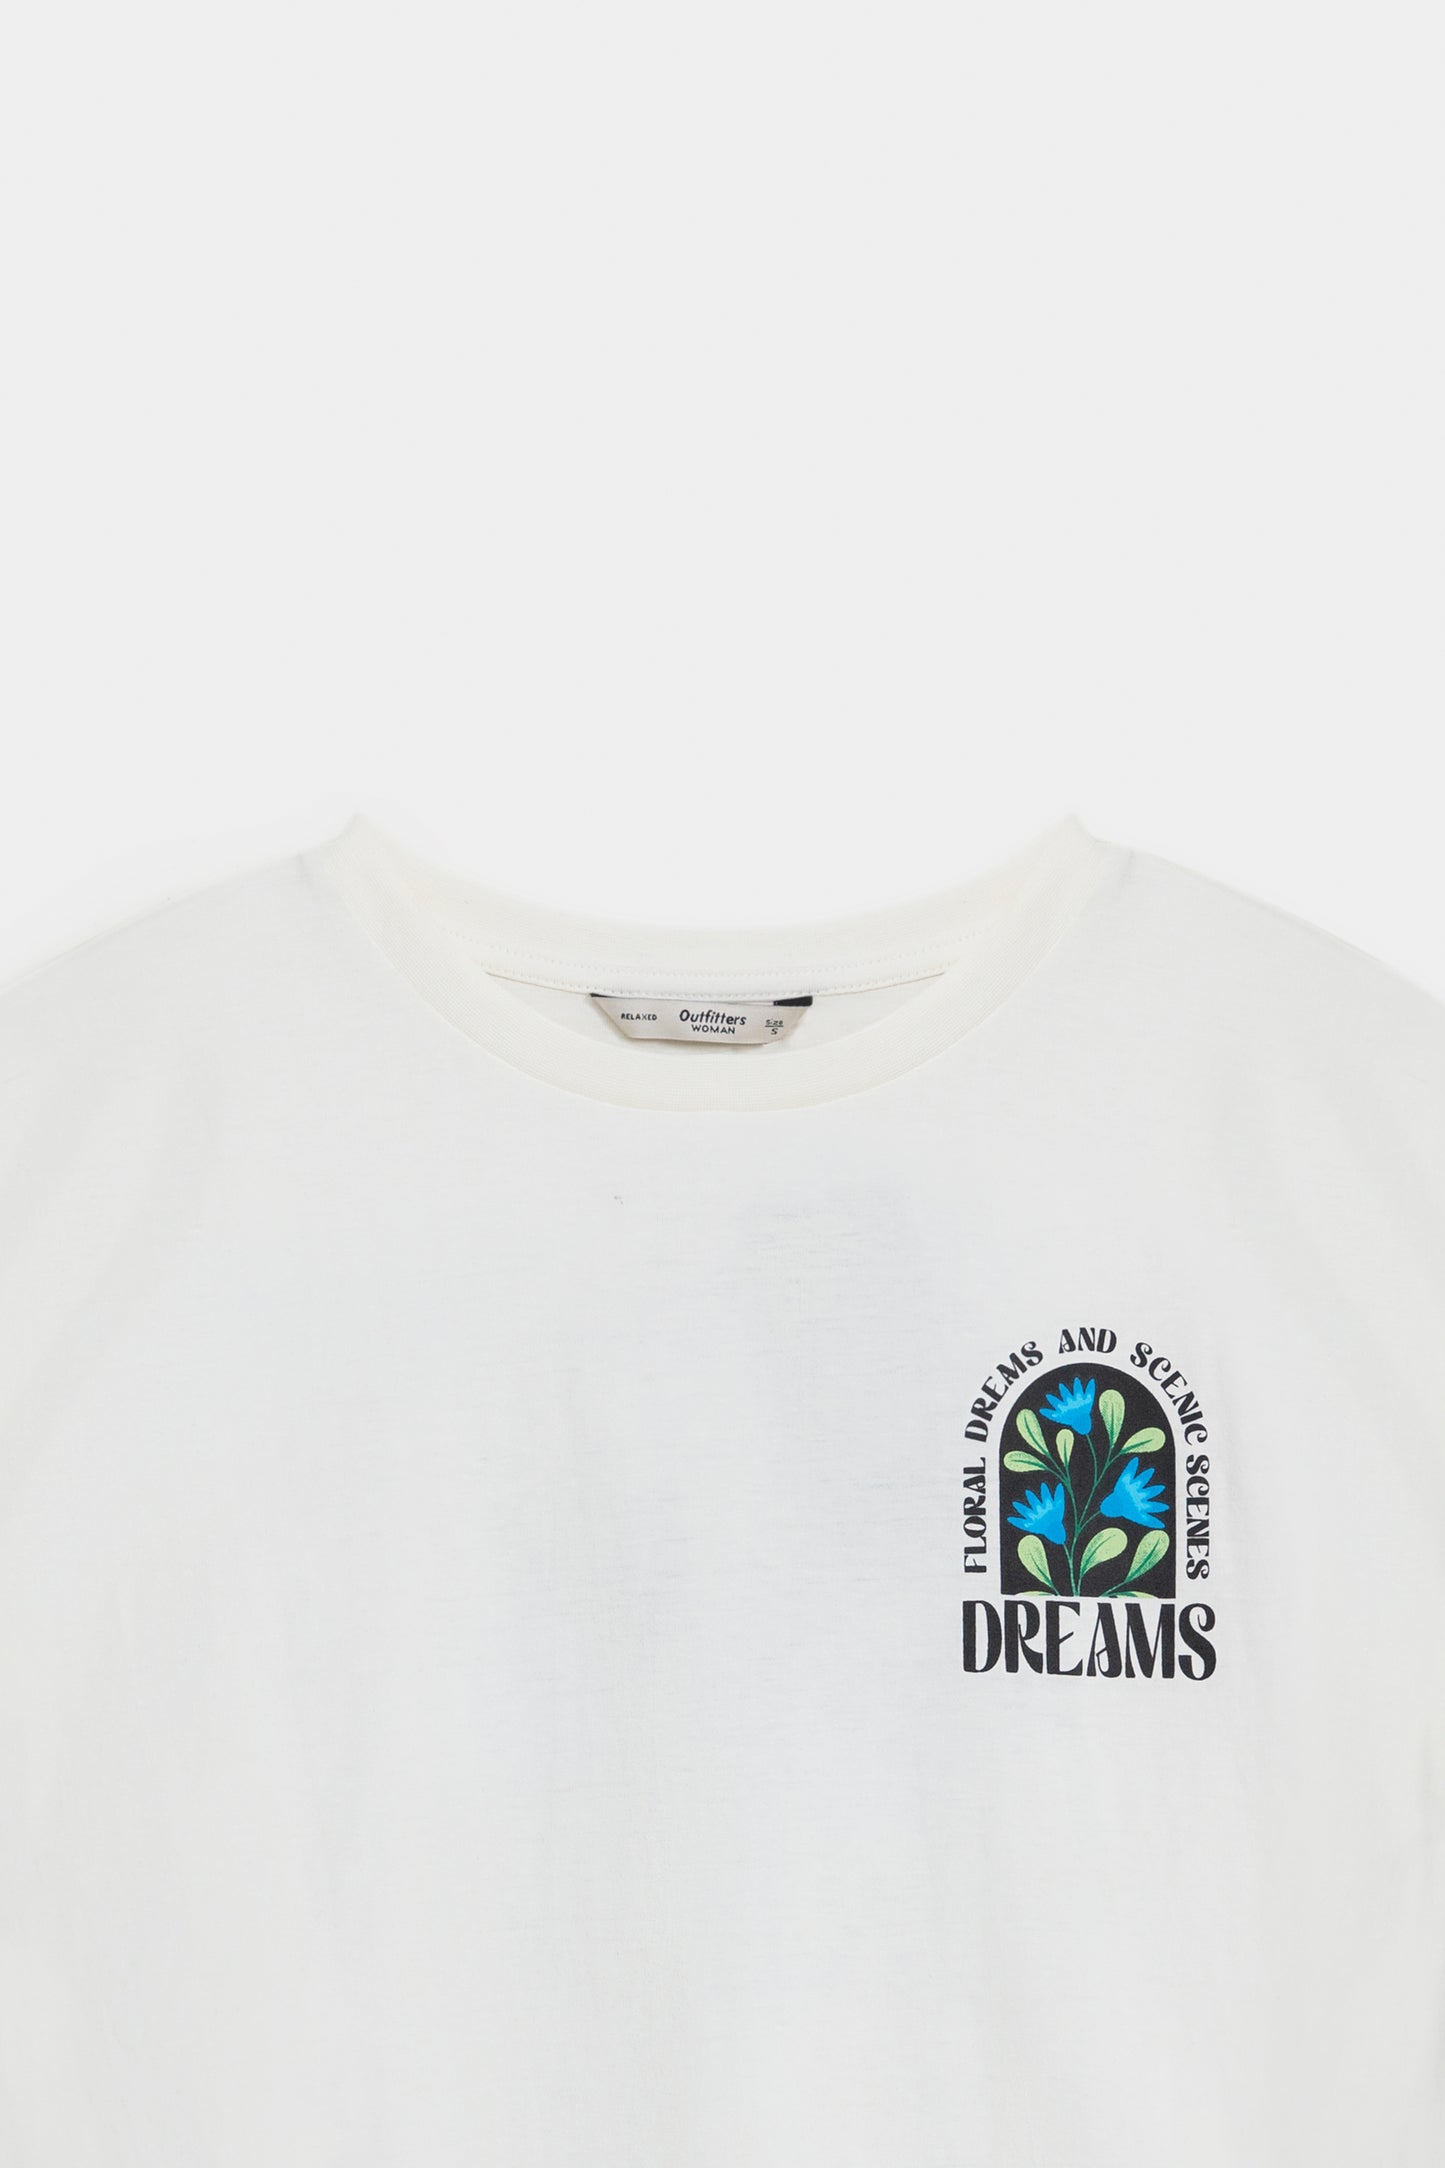 Dreams Graphic T-shirt